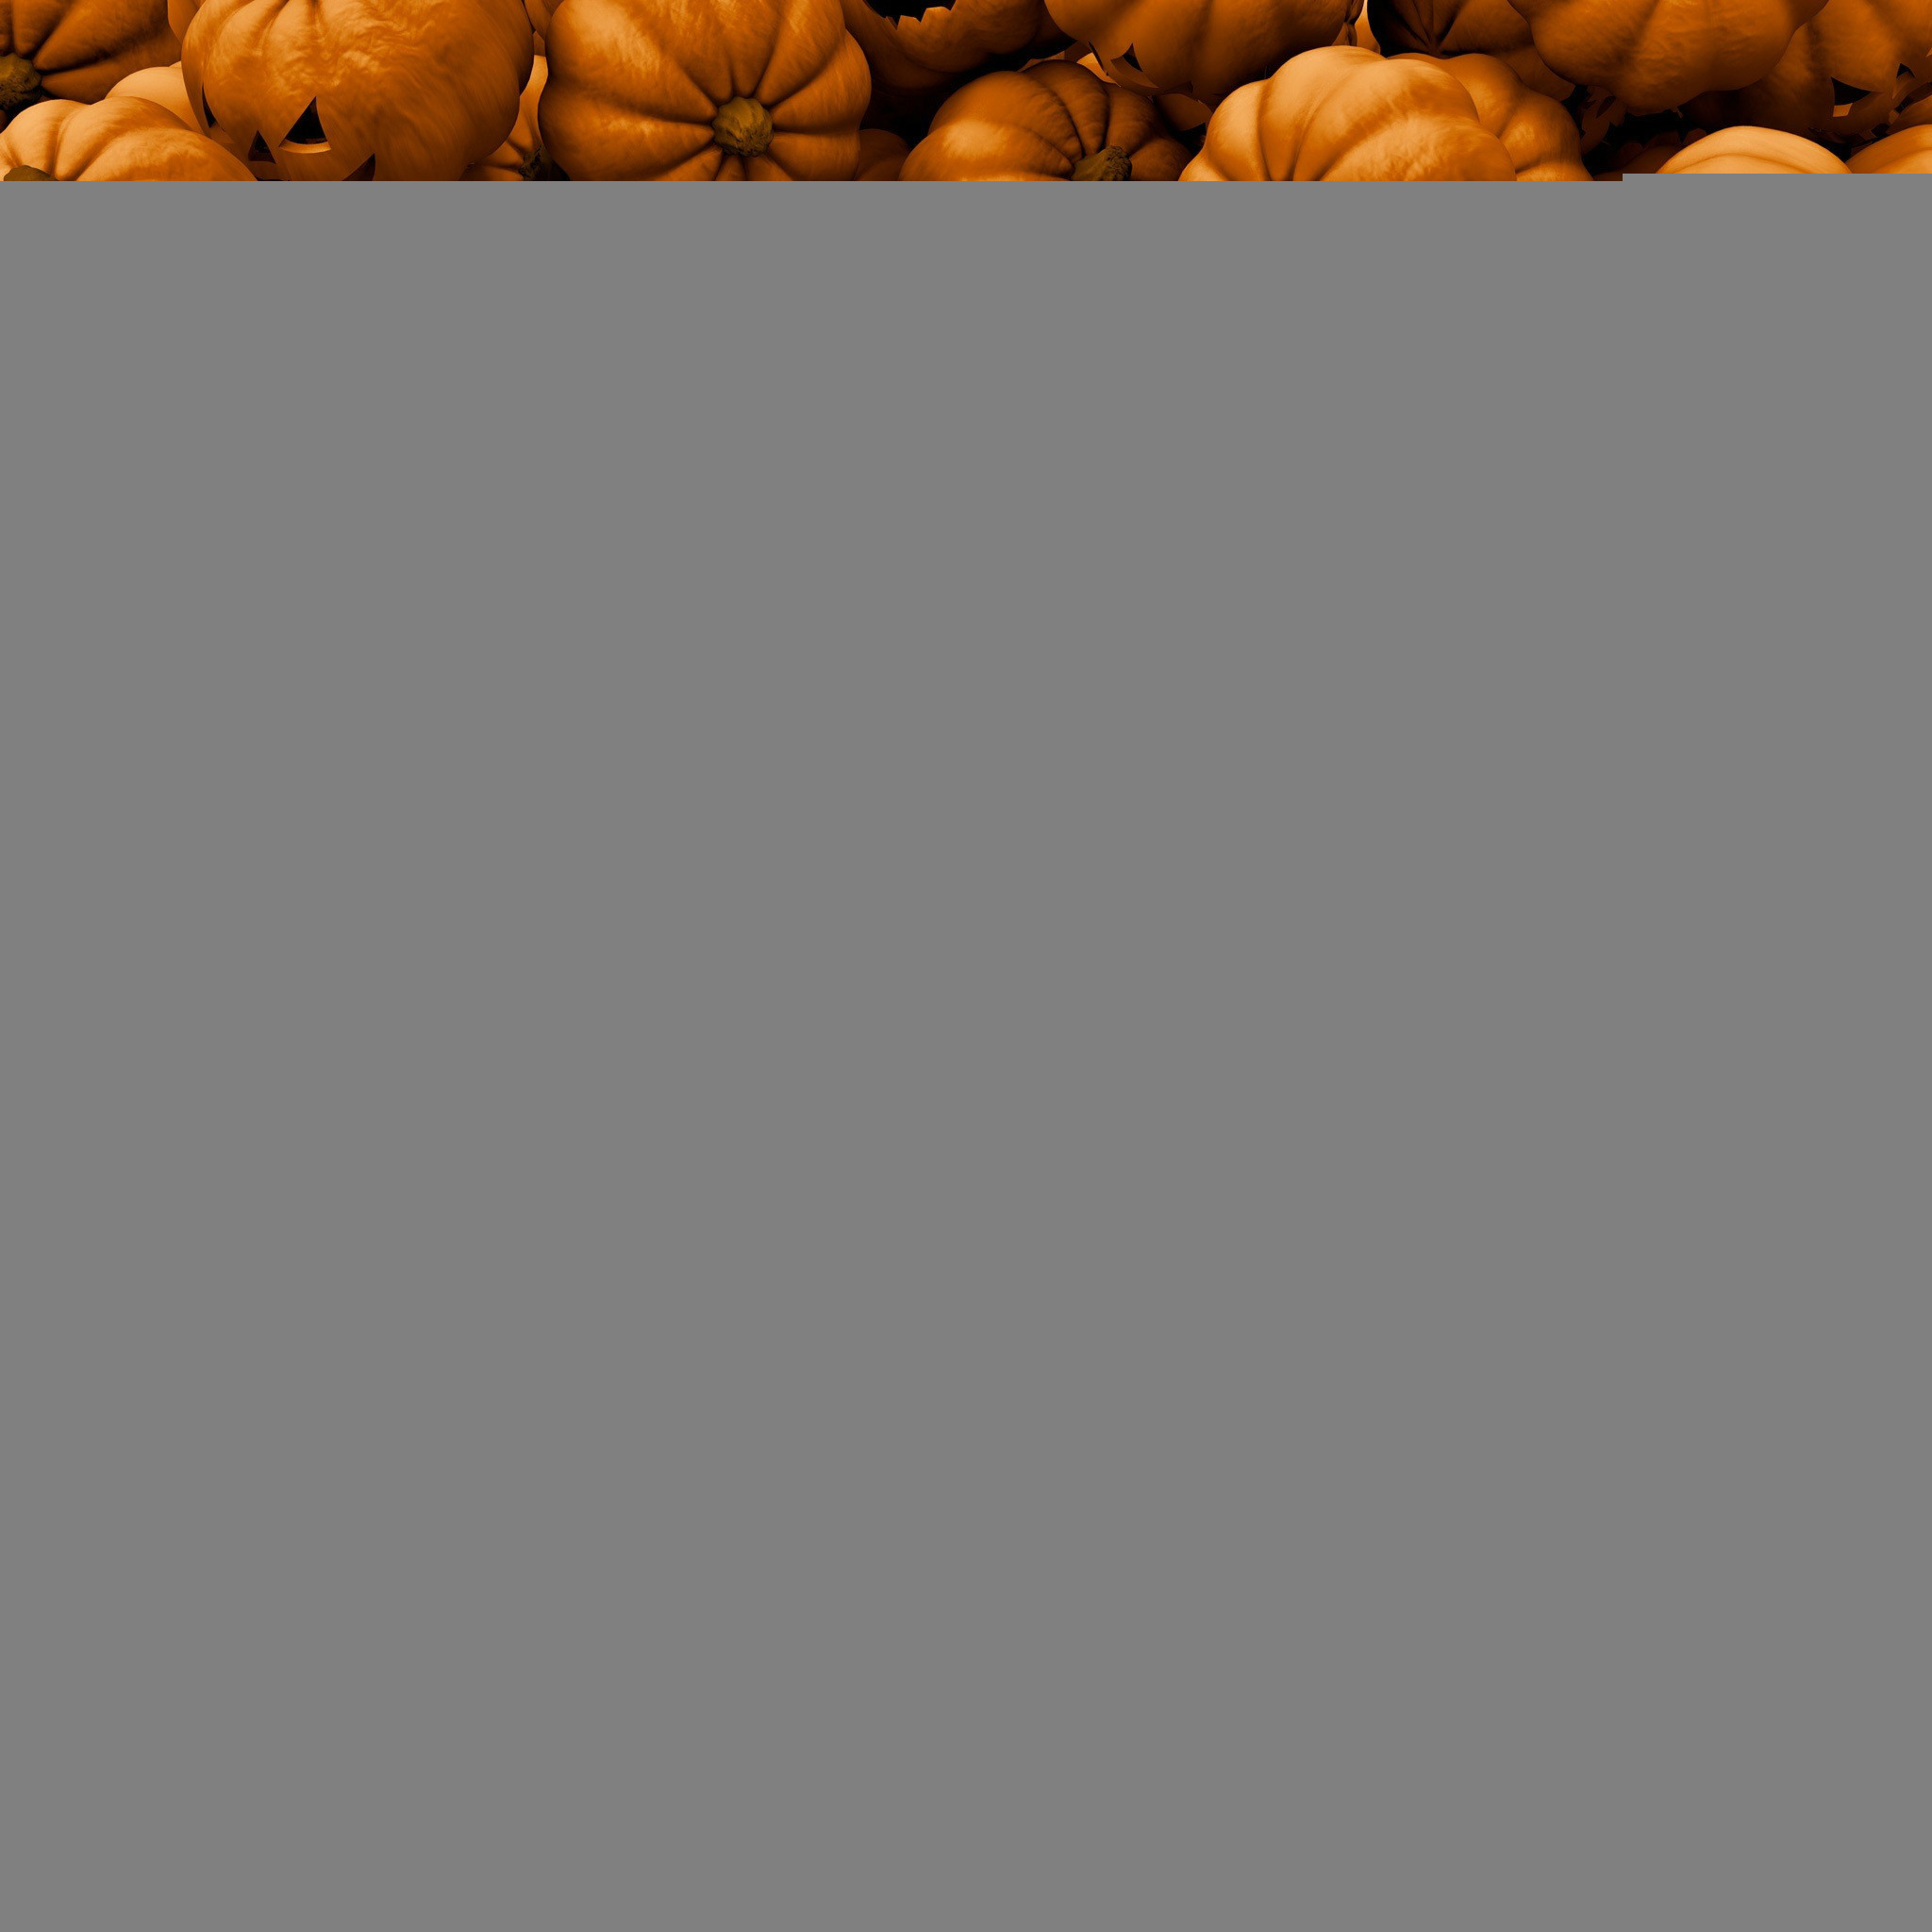 2048x2048 1073 0: Halloween Pumpkins iPad wallpaper